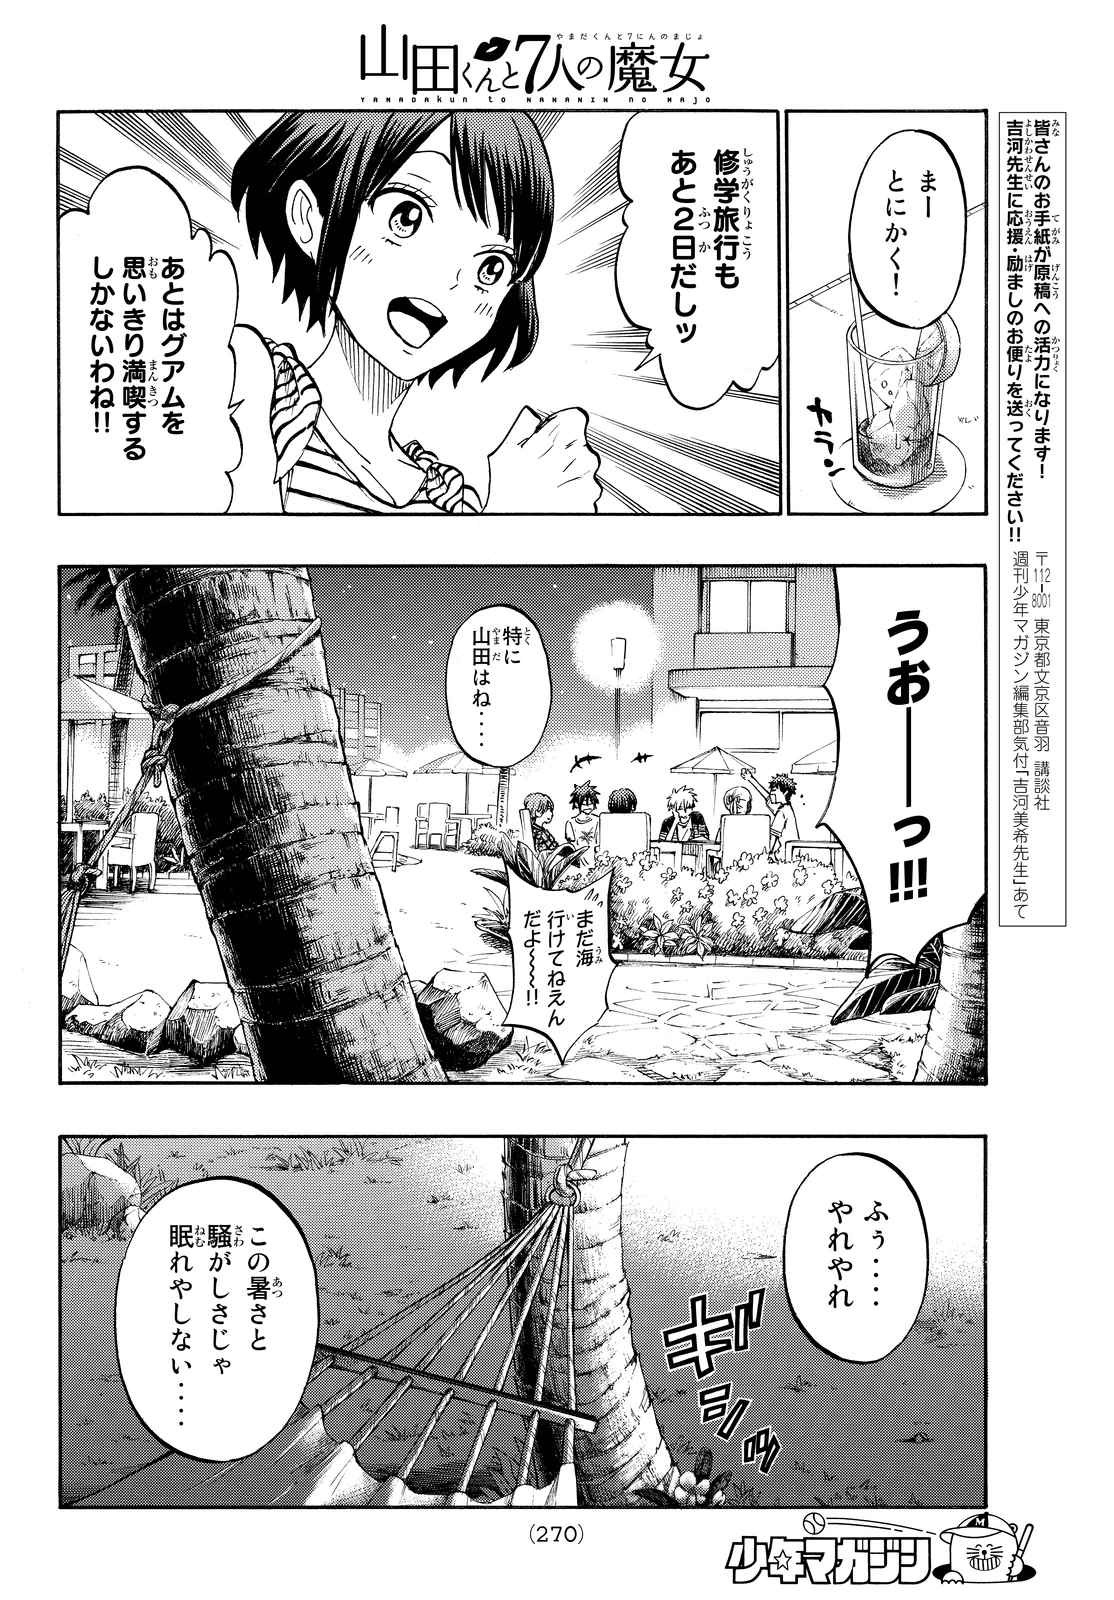 Yamada-kun to 7-nin no Majo - Chapter 204 - Page 19